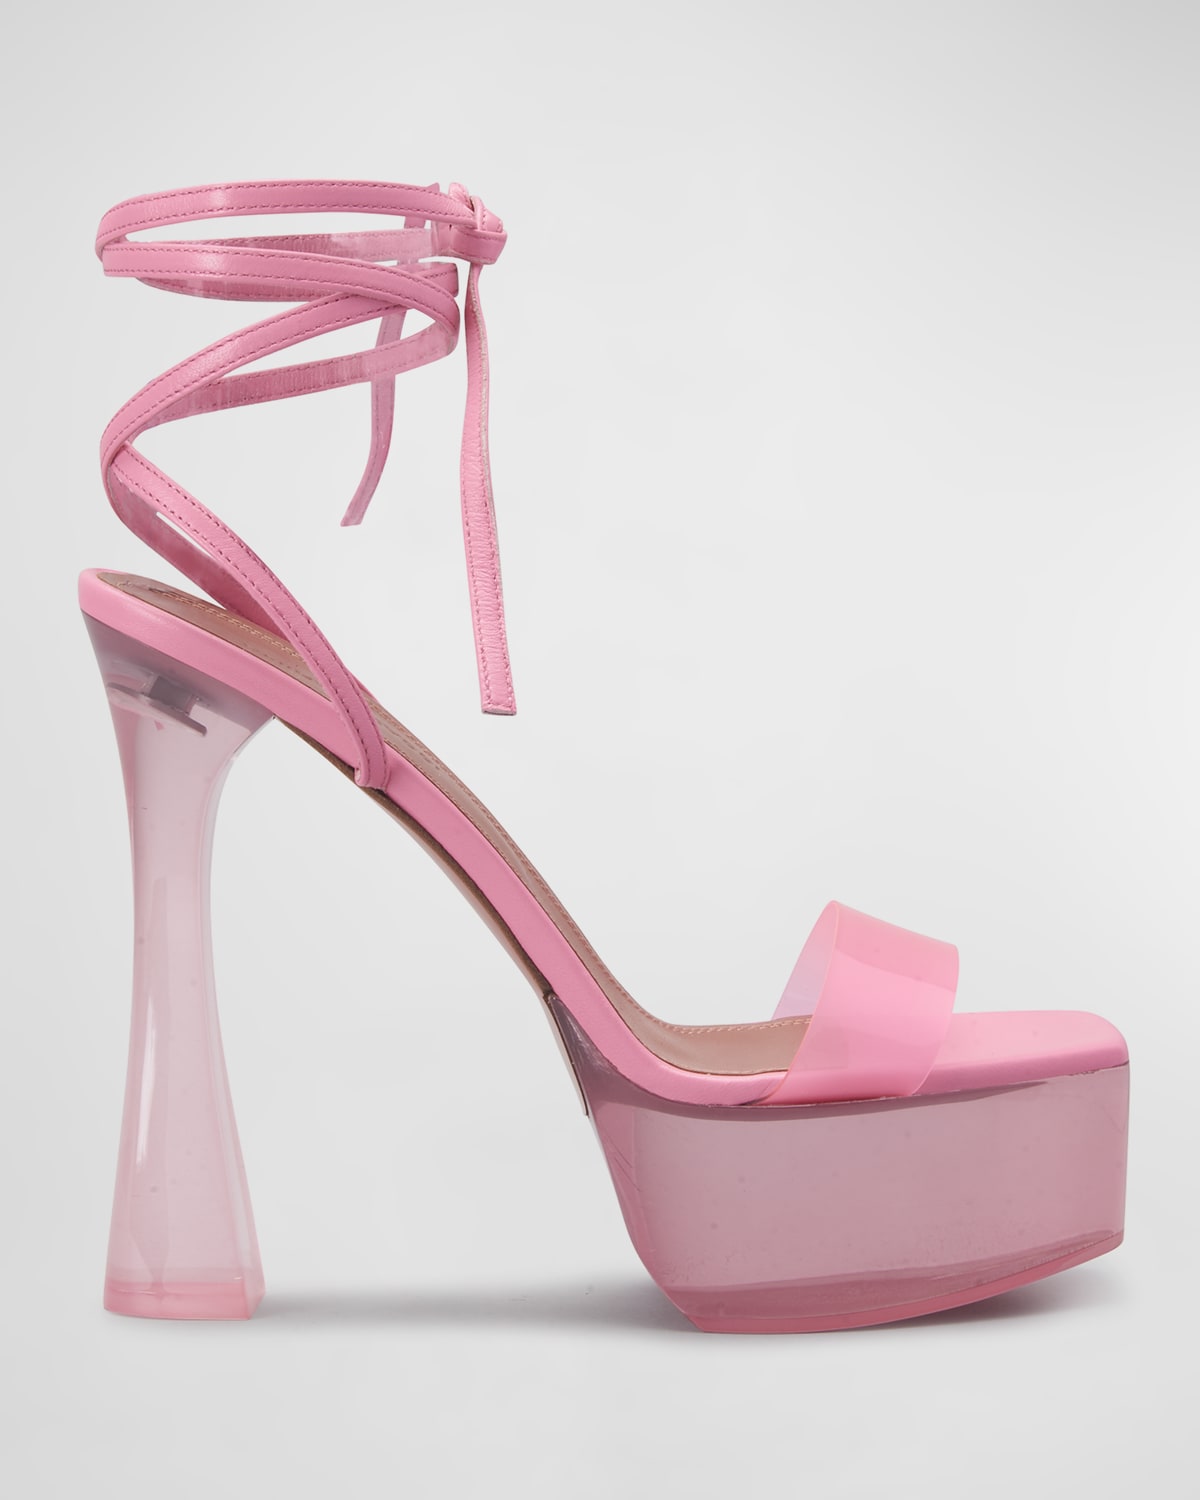 Amina Muaddi Sita Suede Ankle-Wrap Platform Sandals | Neiman Marcus